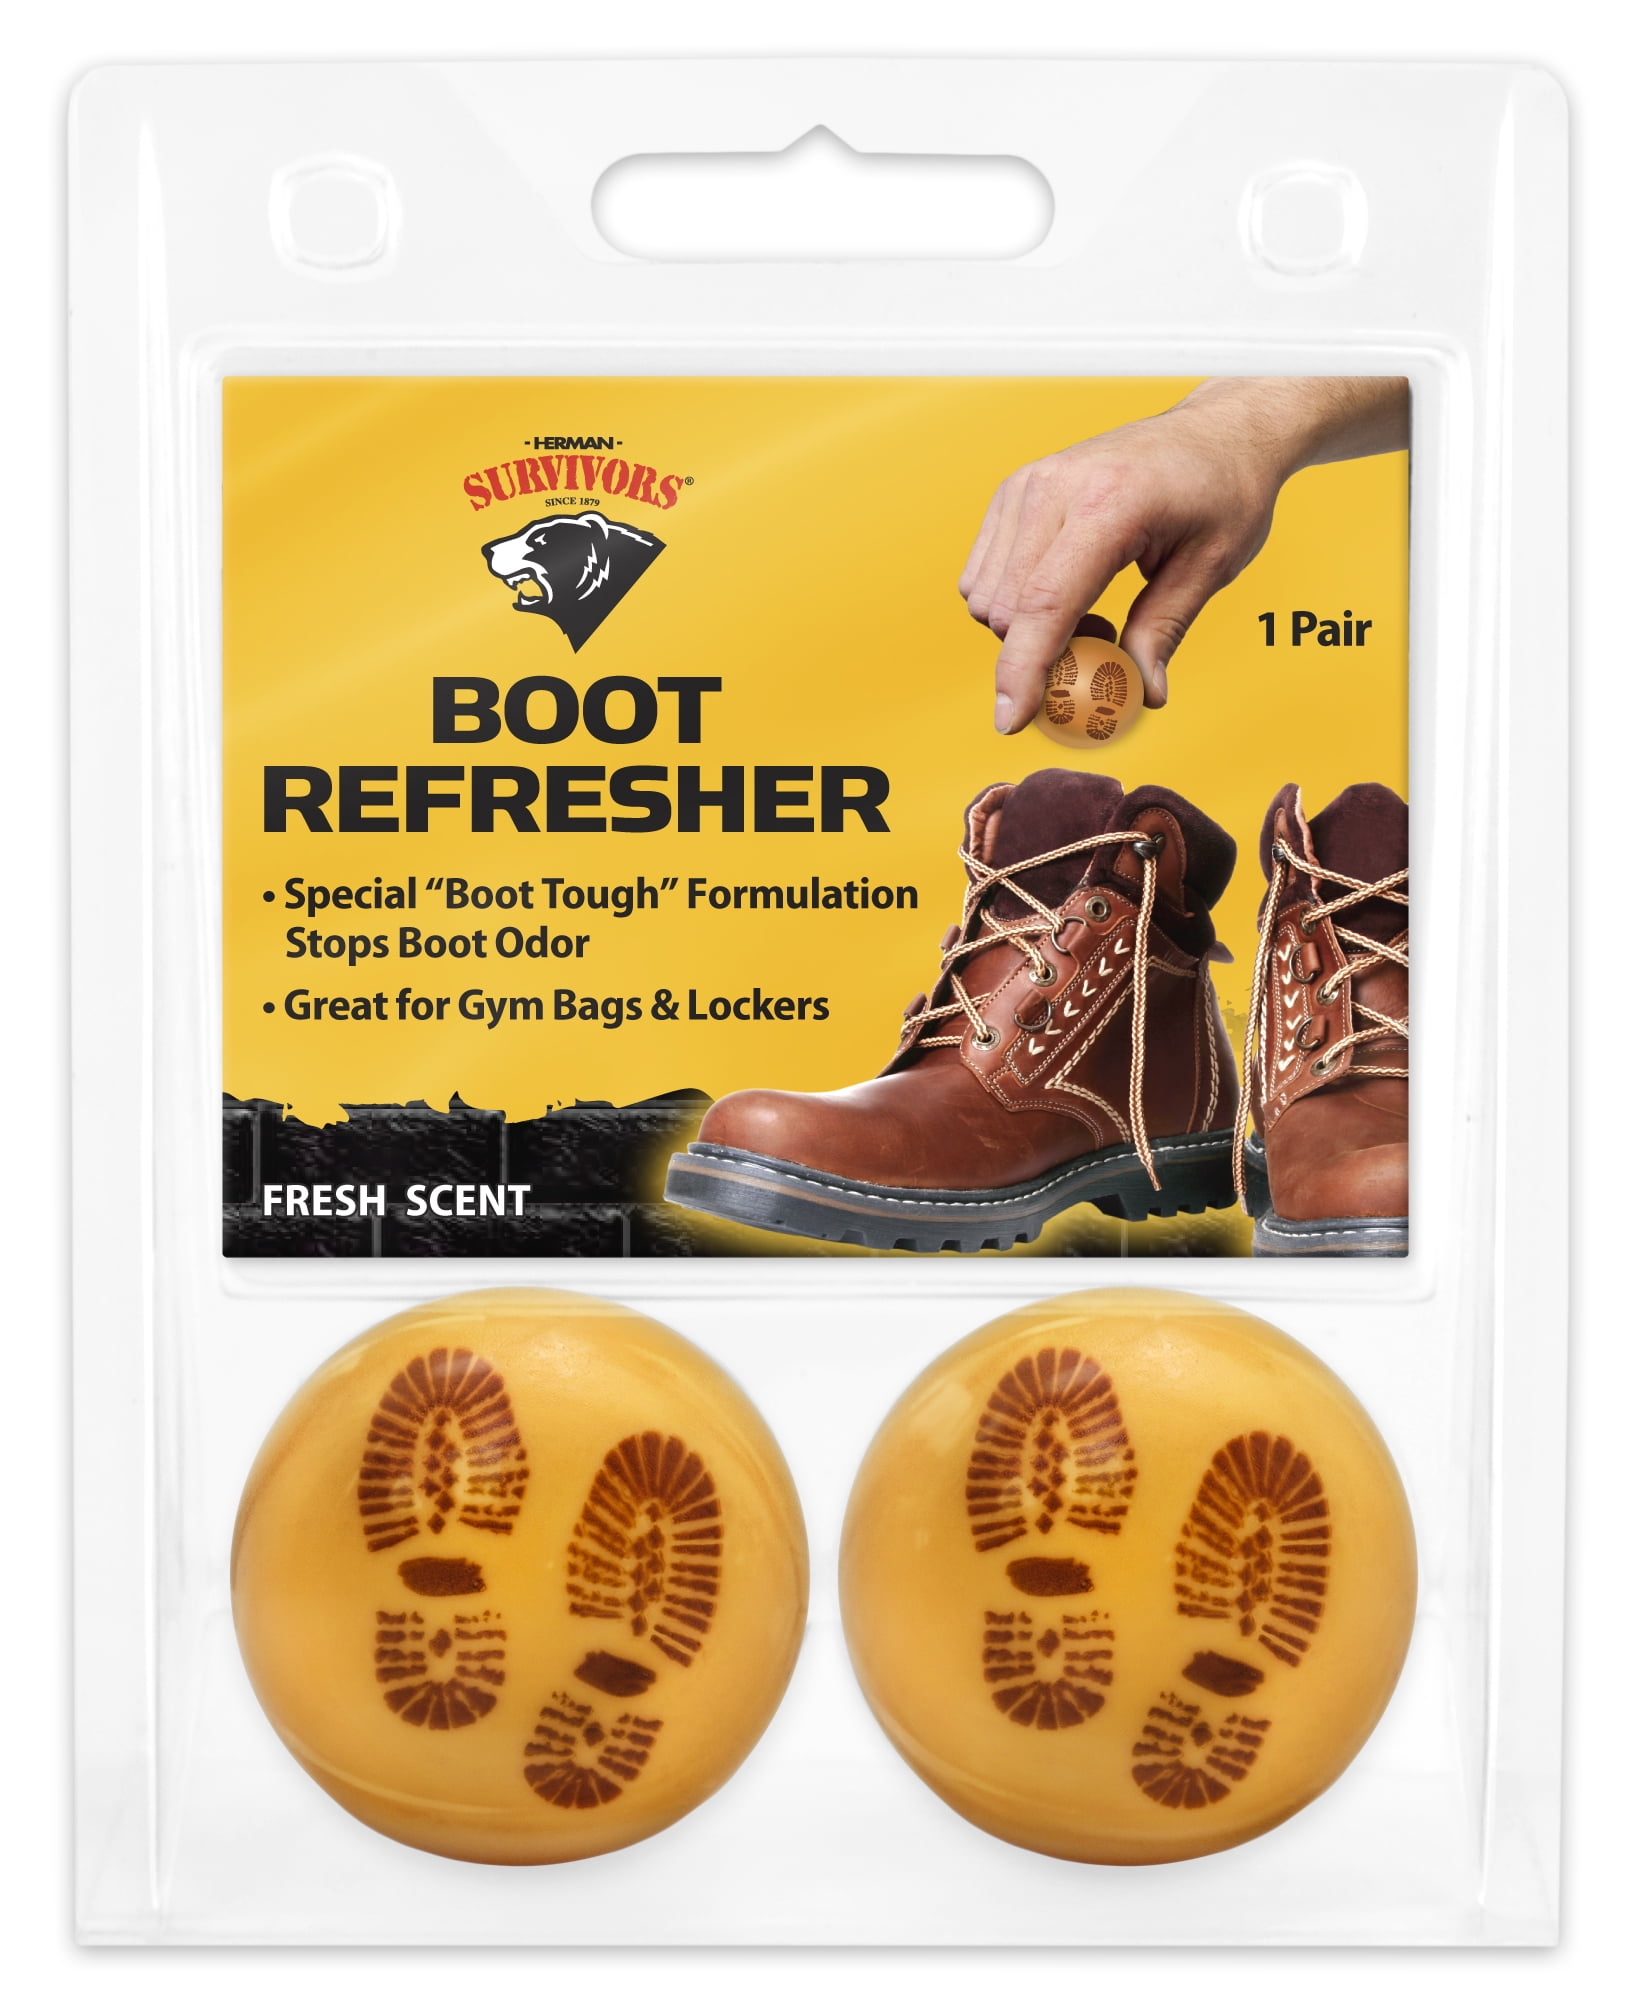 Herman Survivors Boot Refresher (Boot 